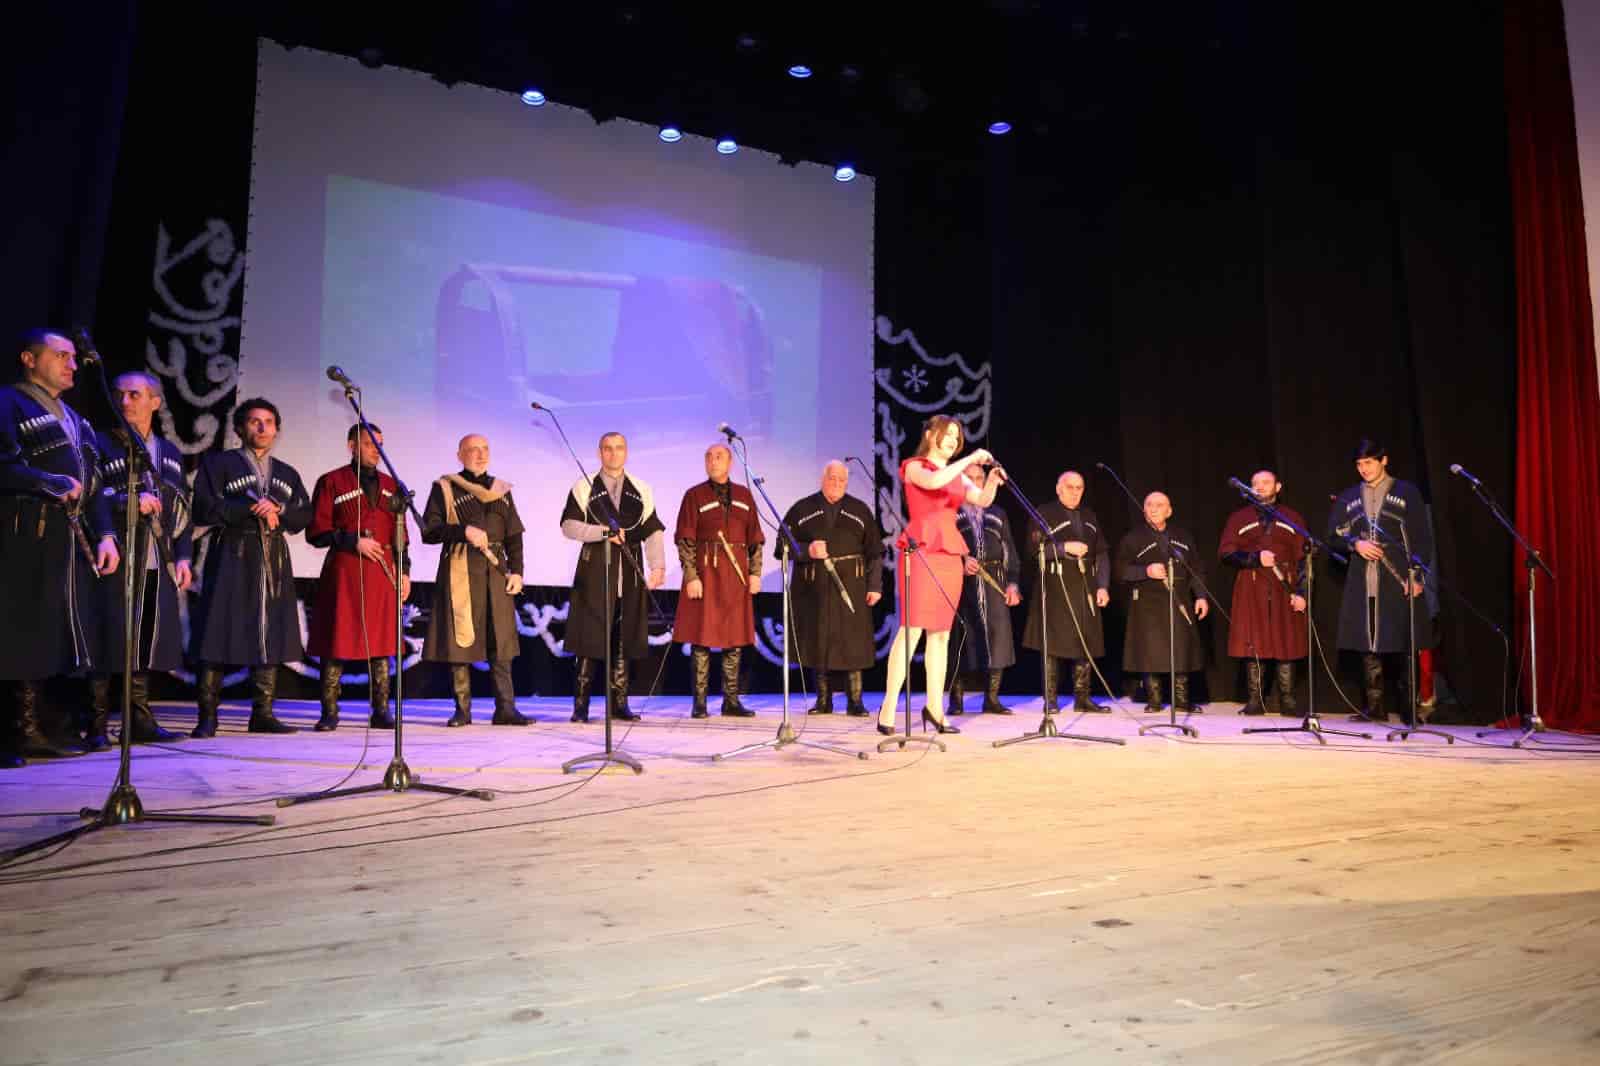 Oni Municipality hosts a festive concert